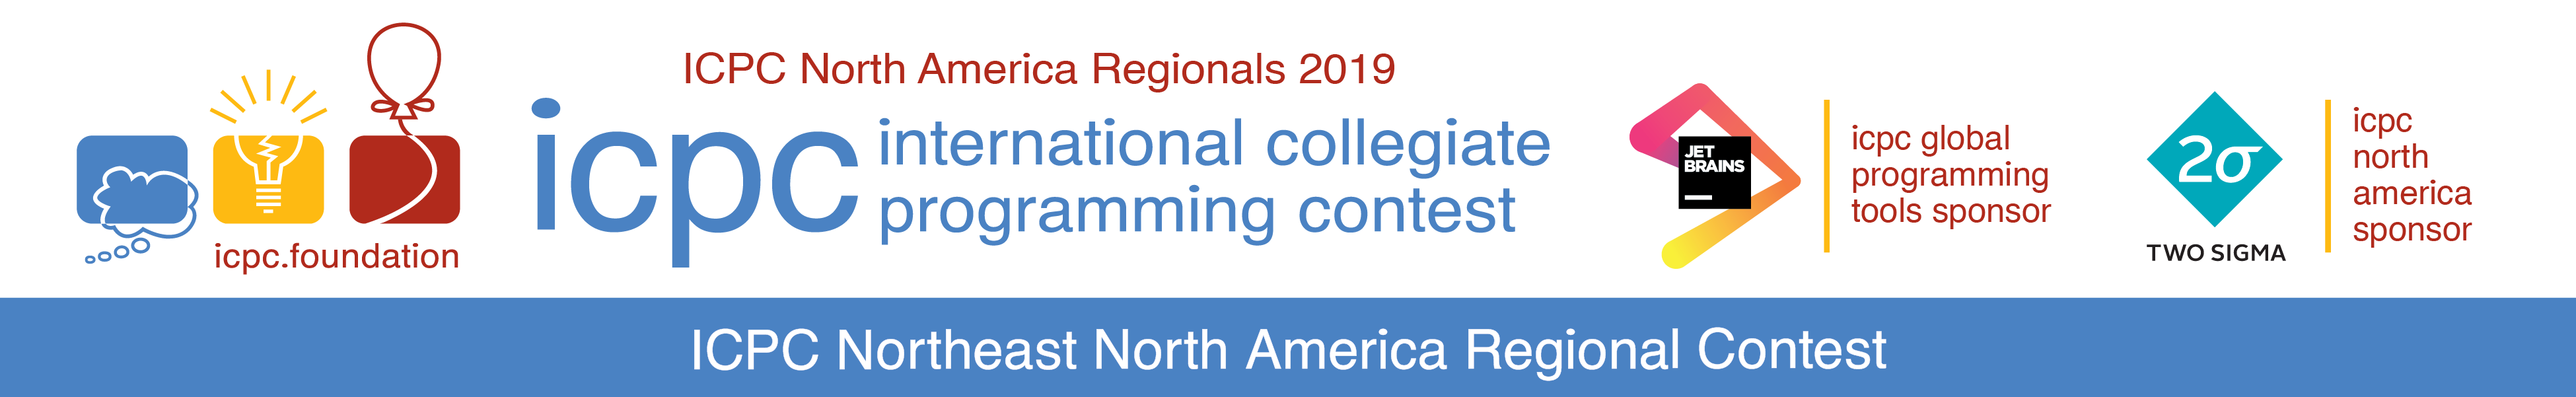 ICPC Northeast North America Regional Contest 2019